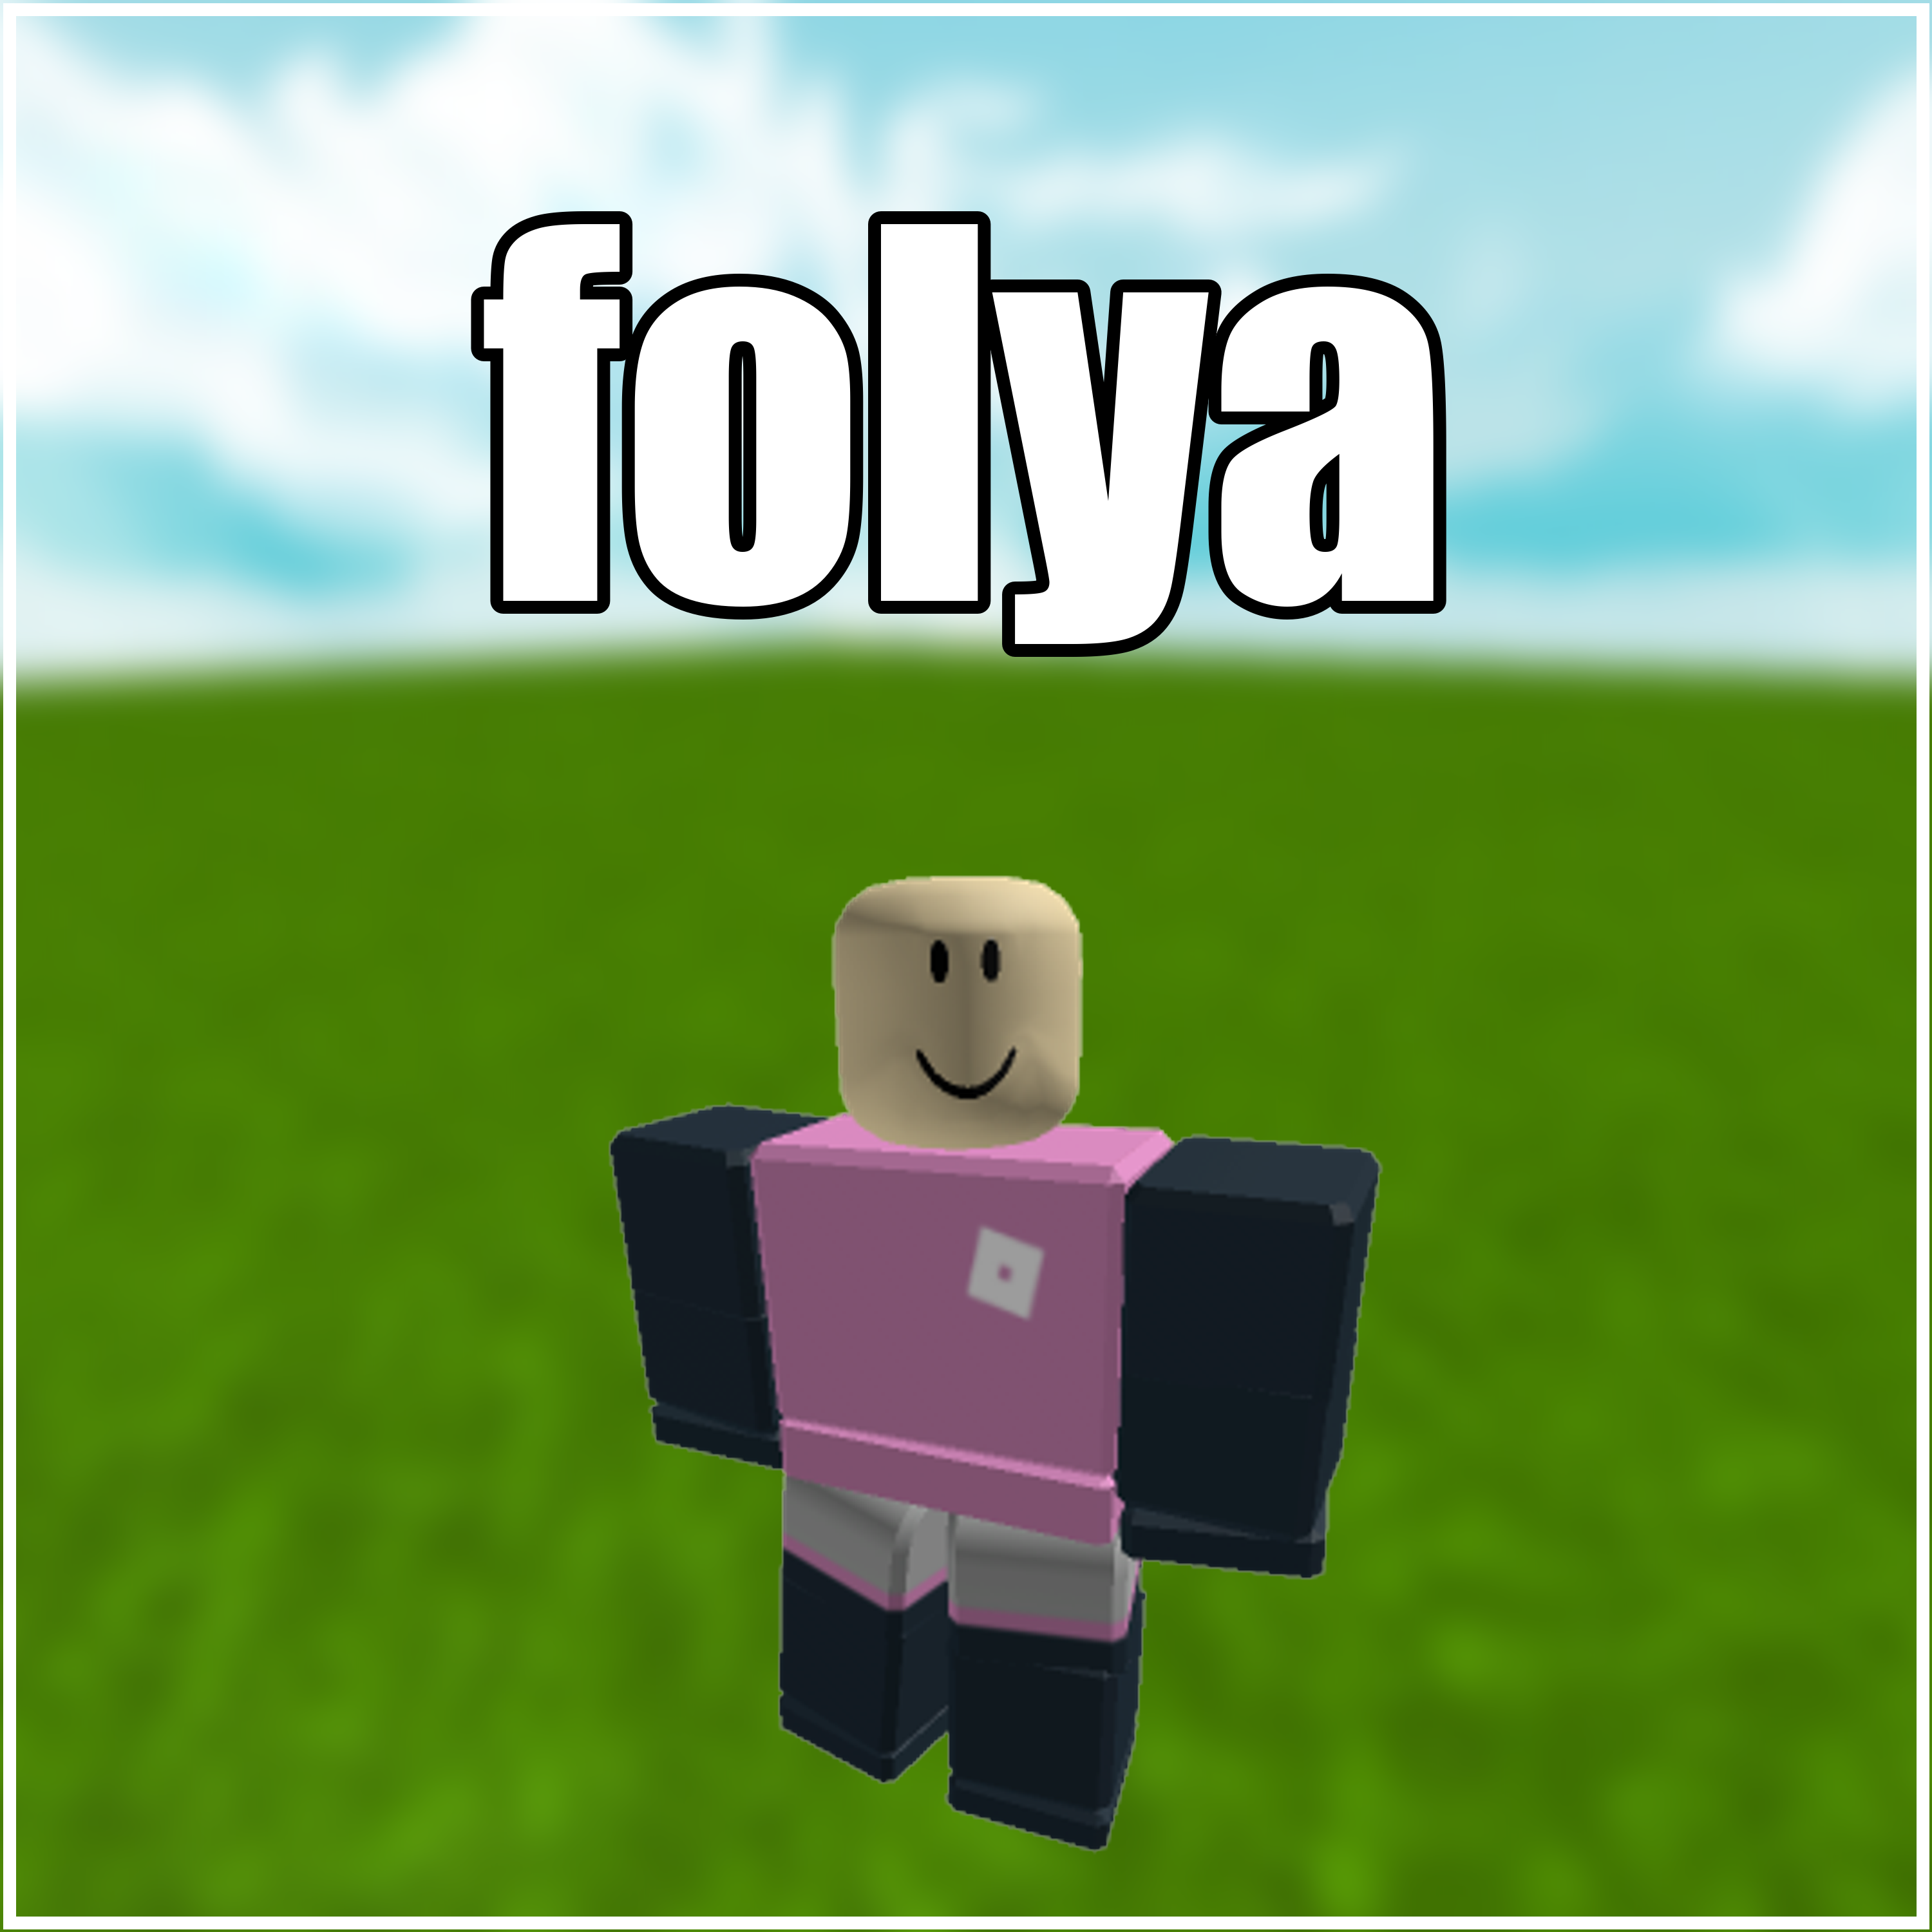 robruh RARE username "folya" ROBLOX account guaranteed to be unverified!